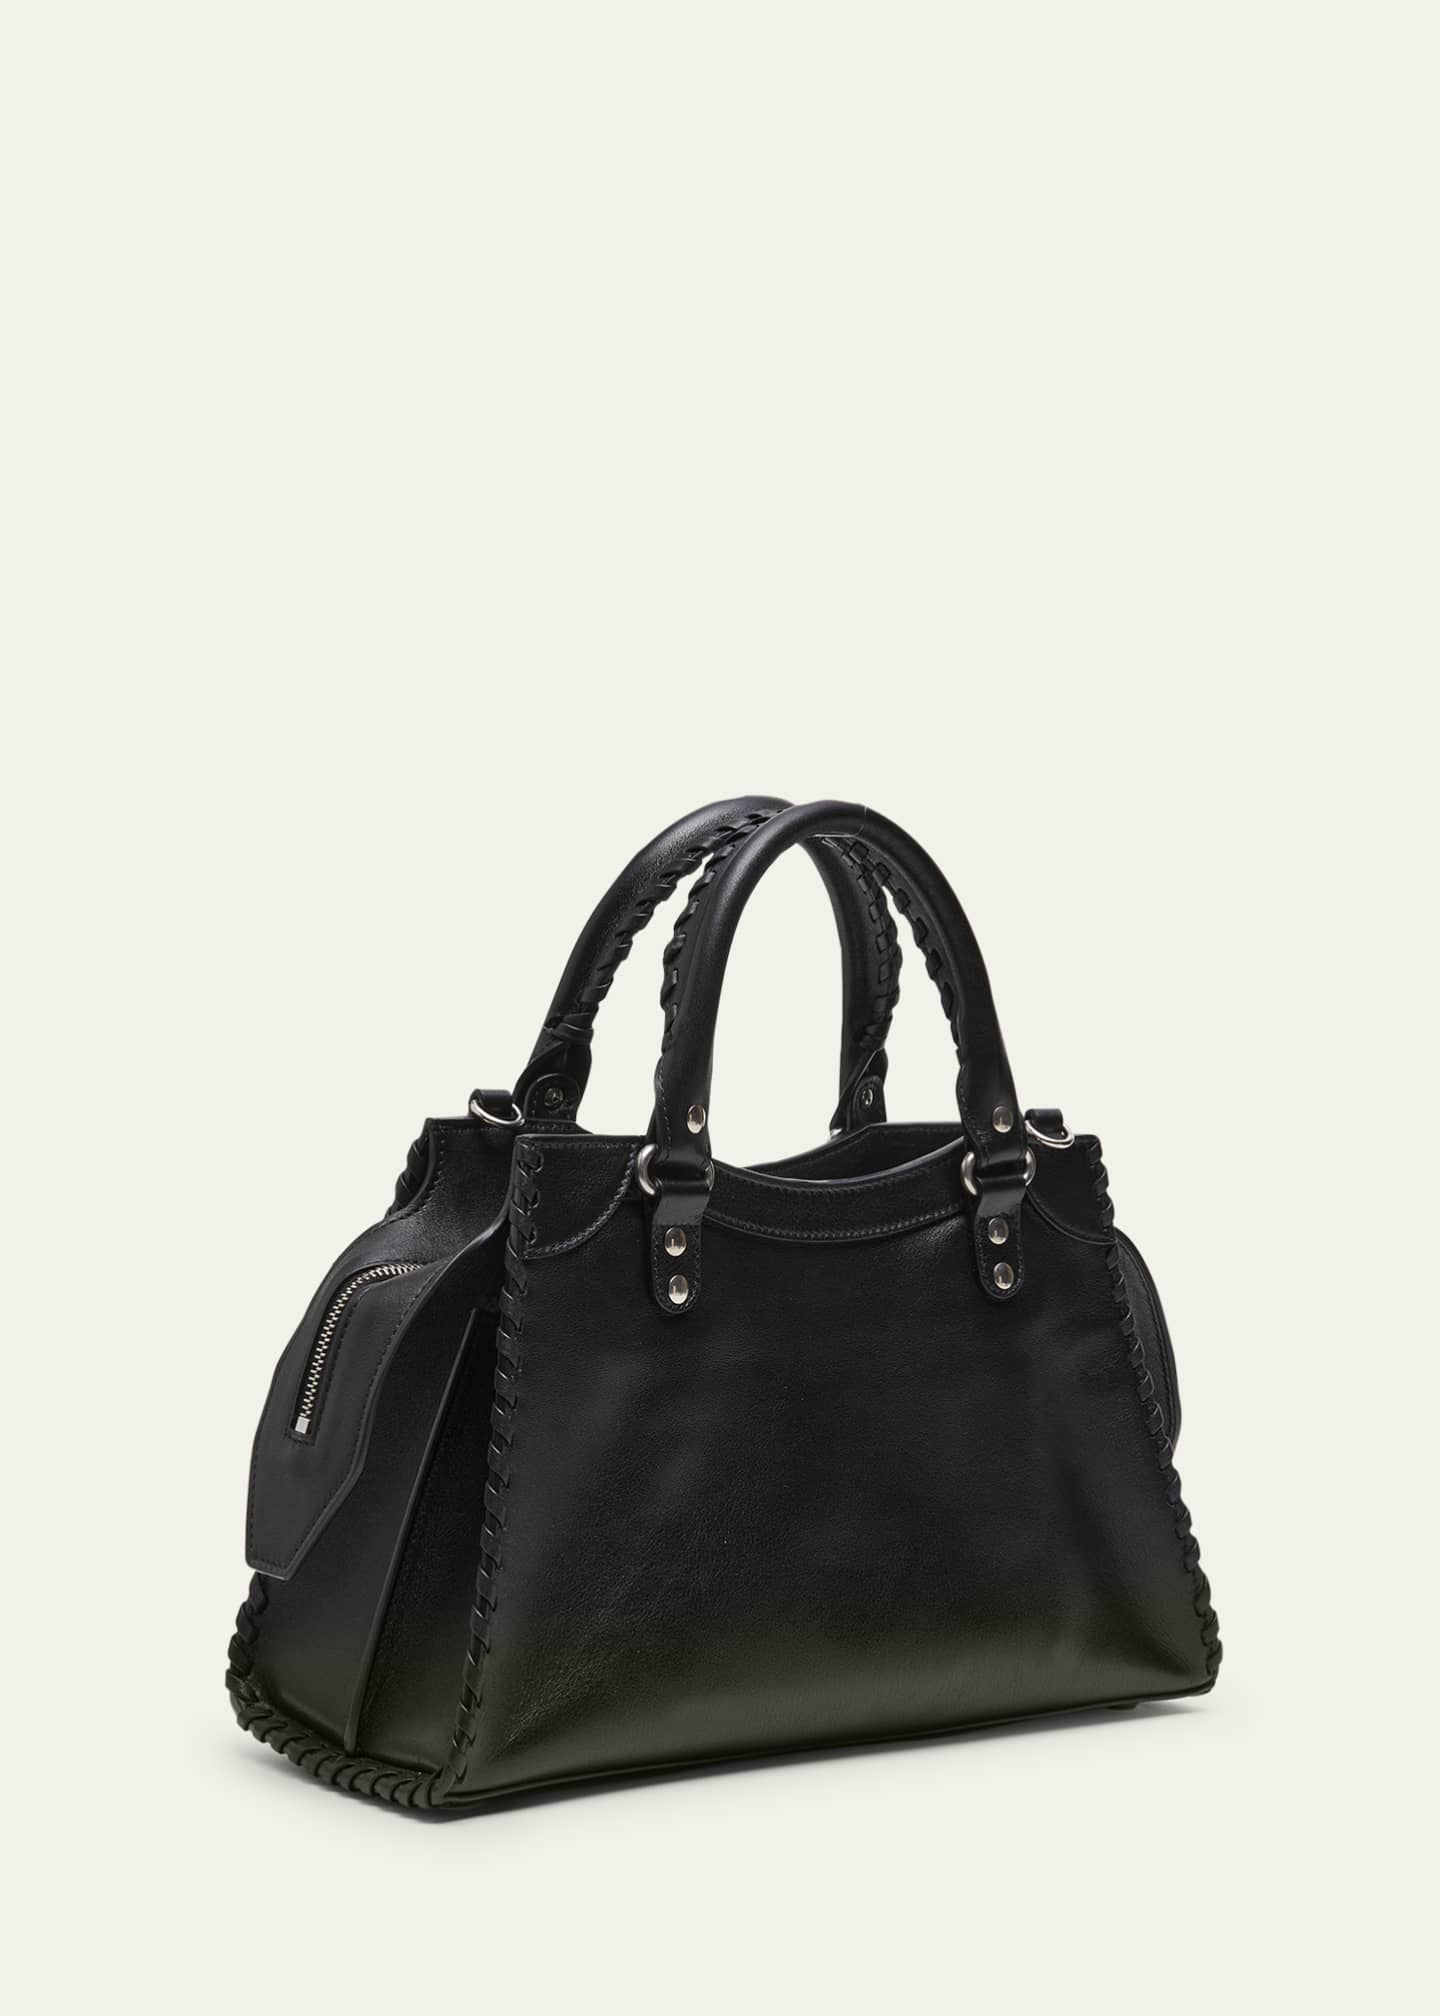 Black Neo Classic City small leather bag, Balenciaga